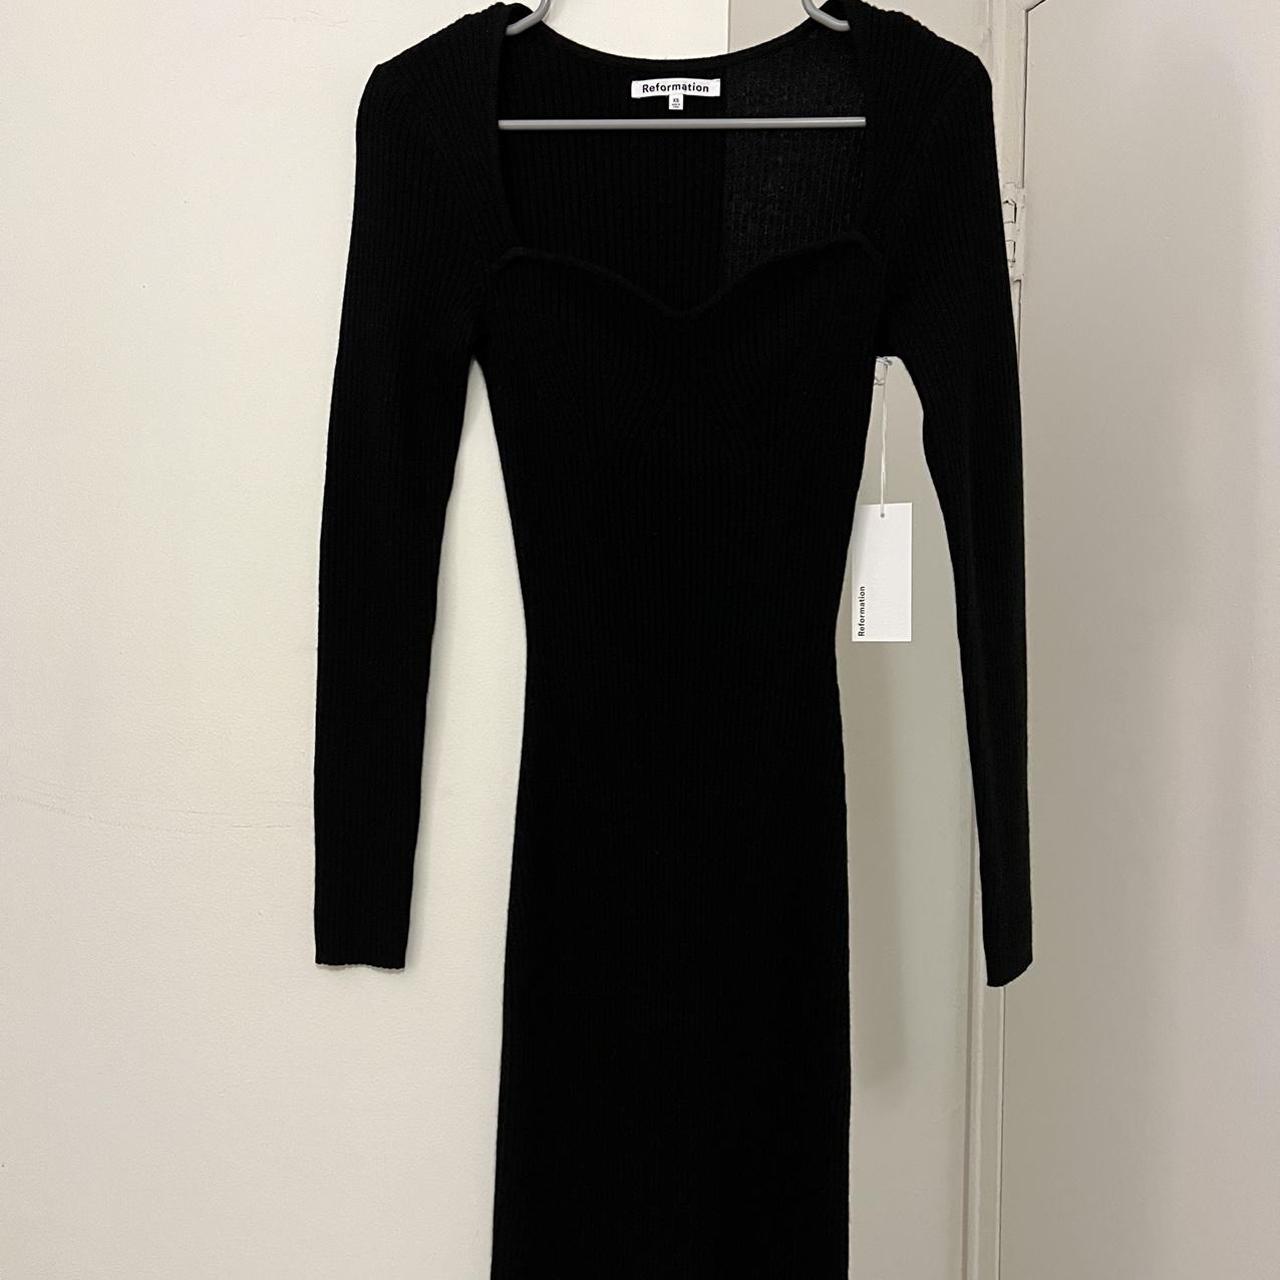 Reformation Tenore Cashmere Sweater Dress Size... - Depop